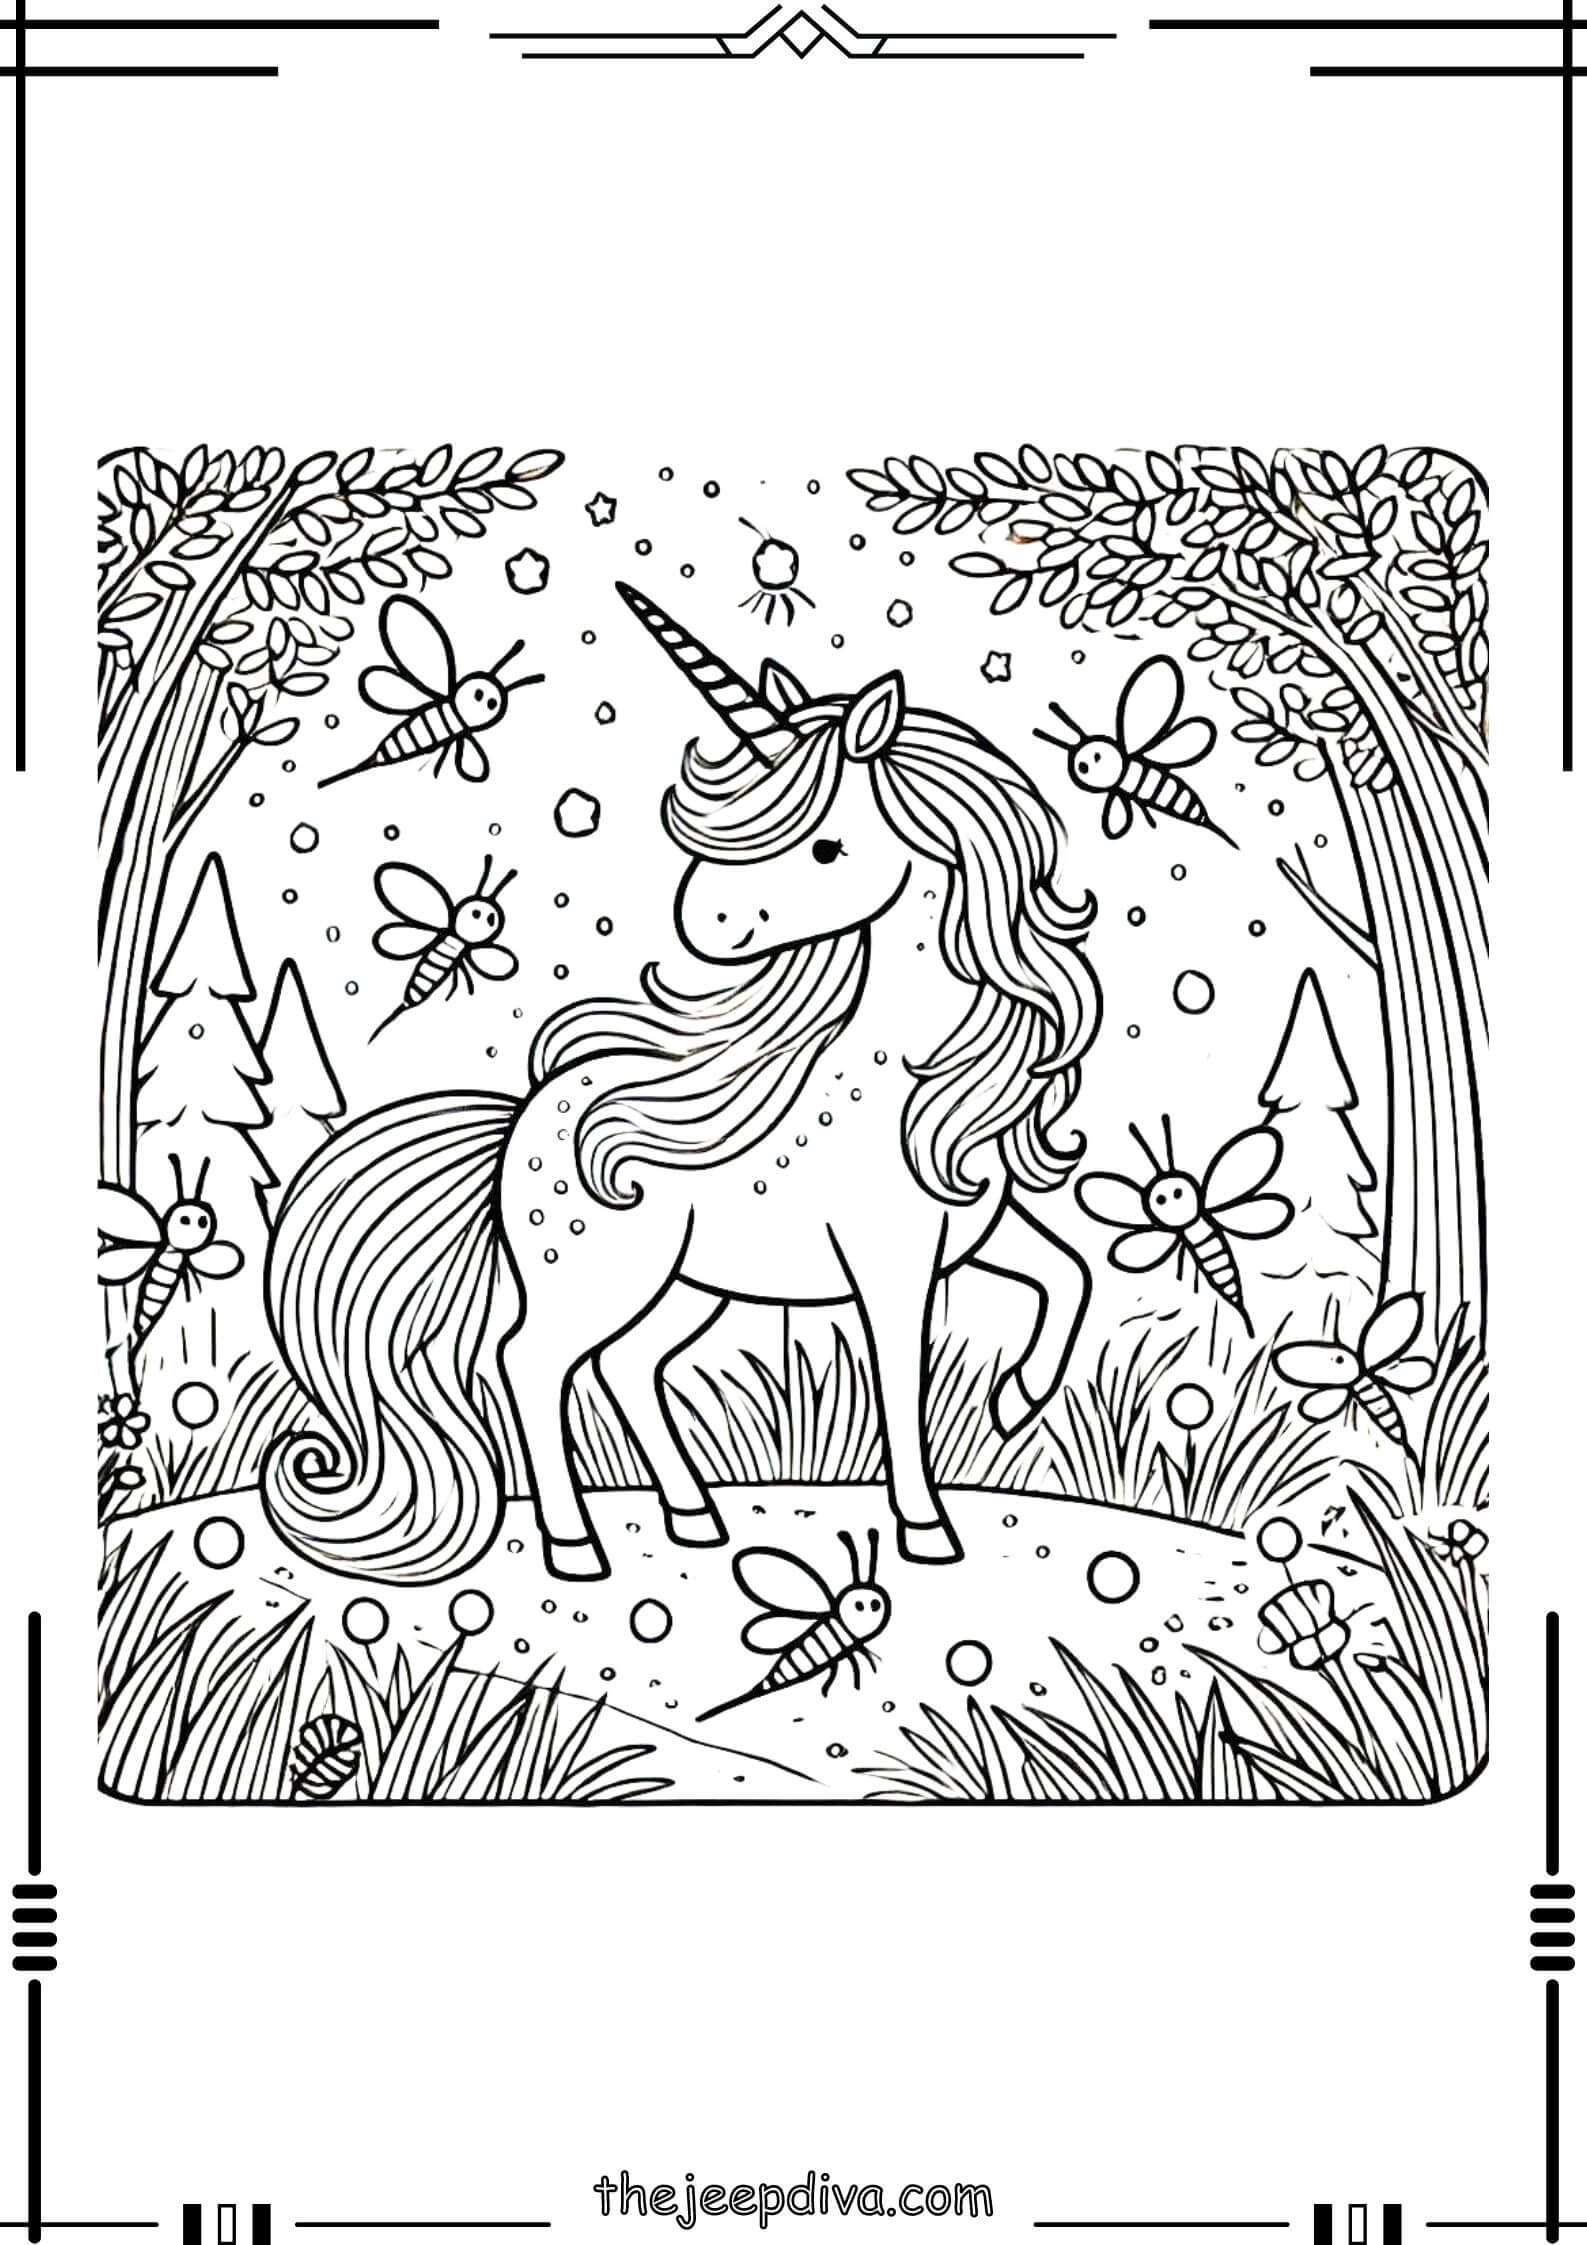 unicorn-coloring-page-hard-6